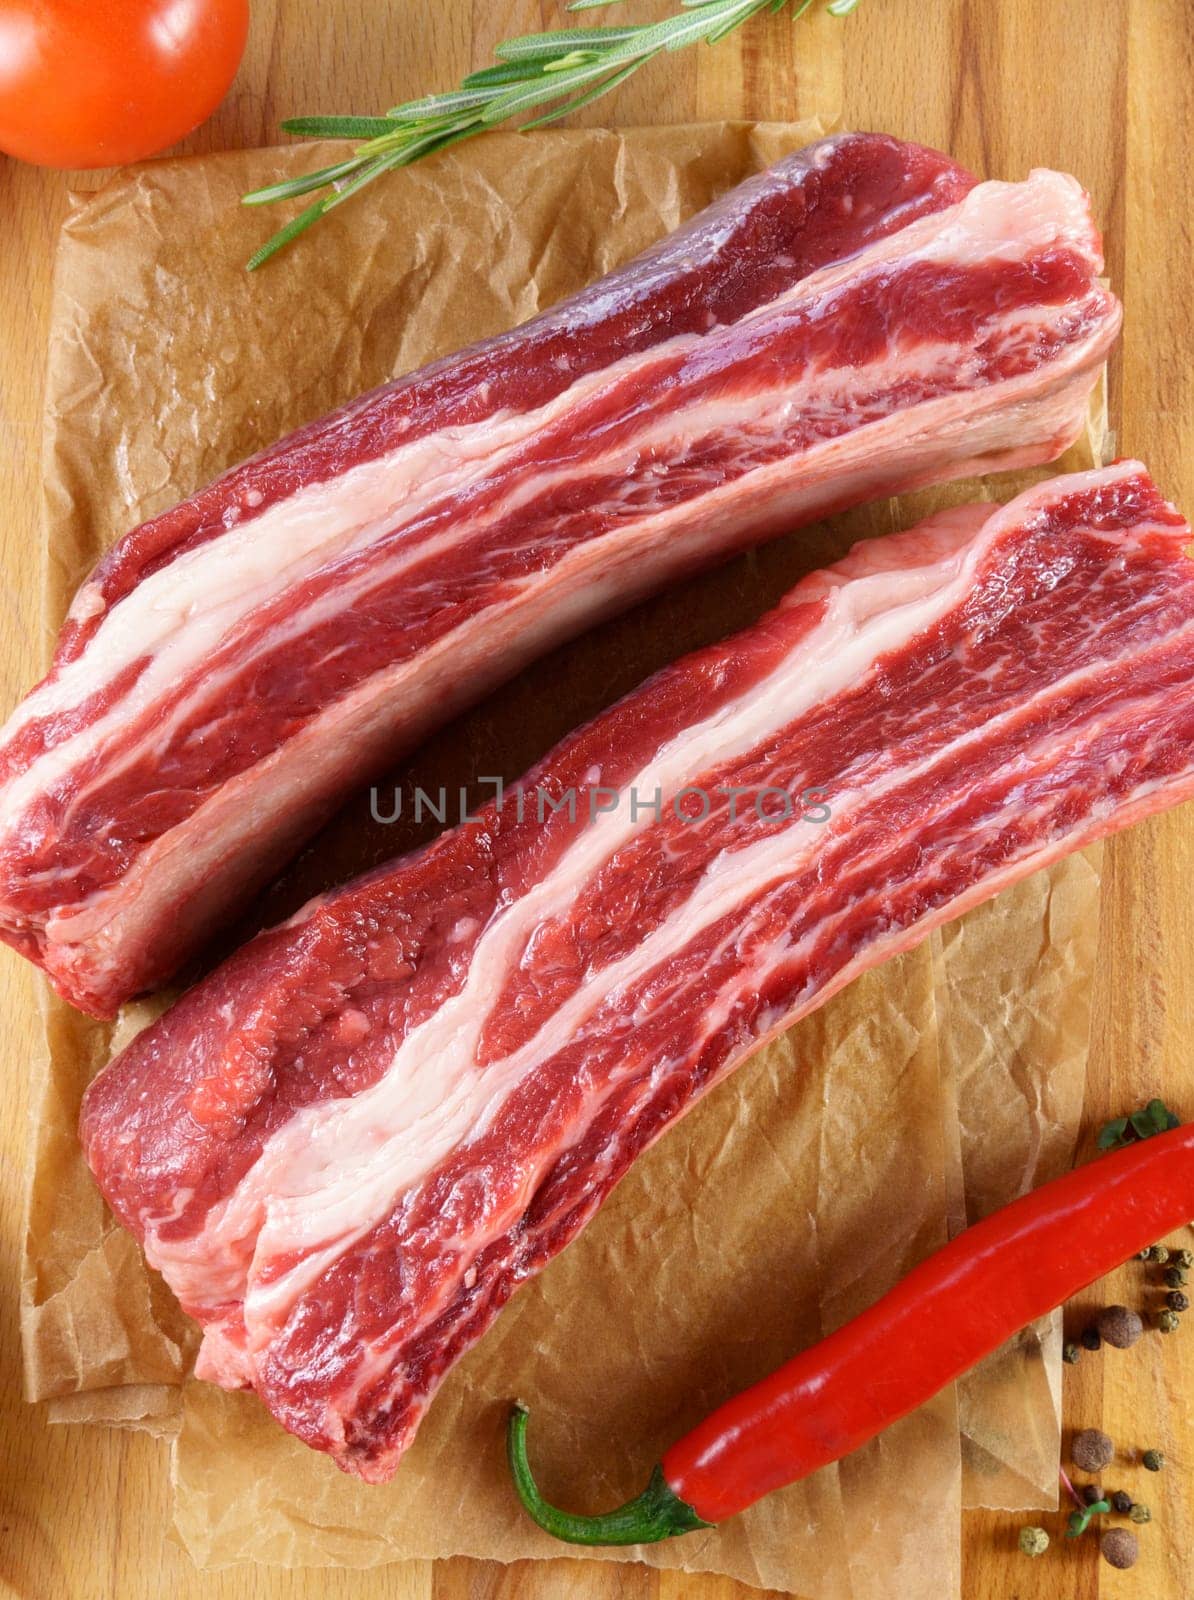 Raw cowboy steak on wooden background, prime rib eye on bone. Vertical photo